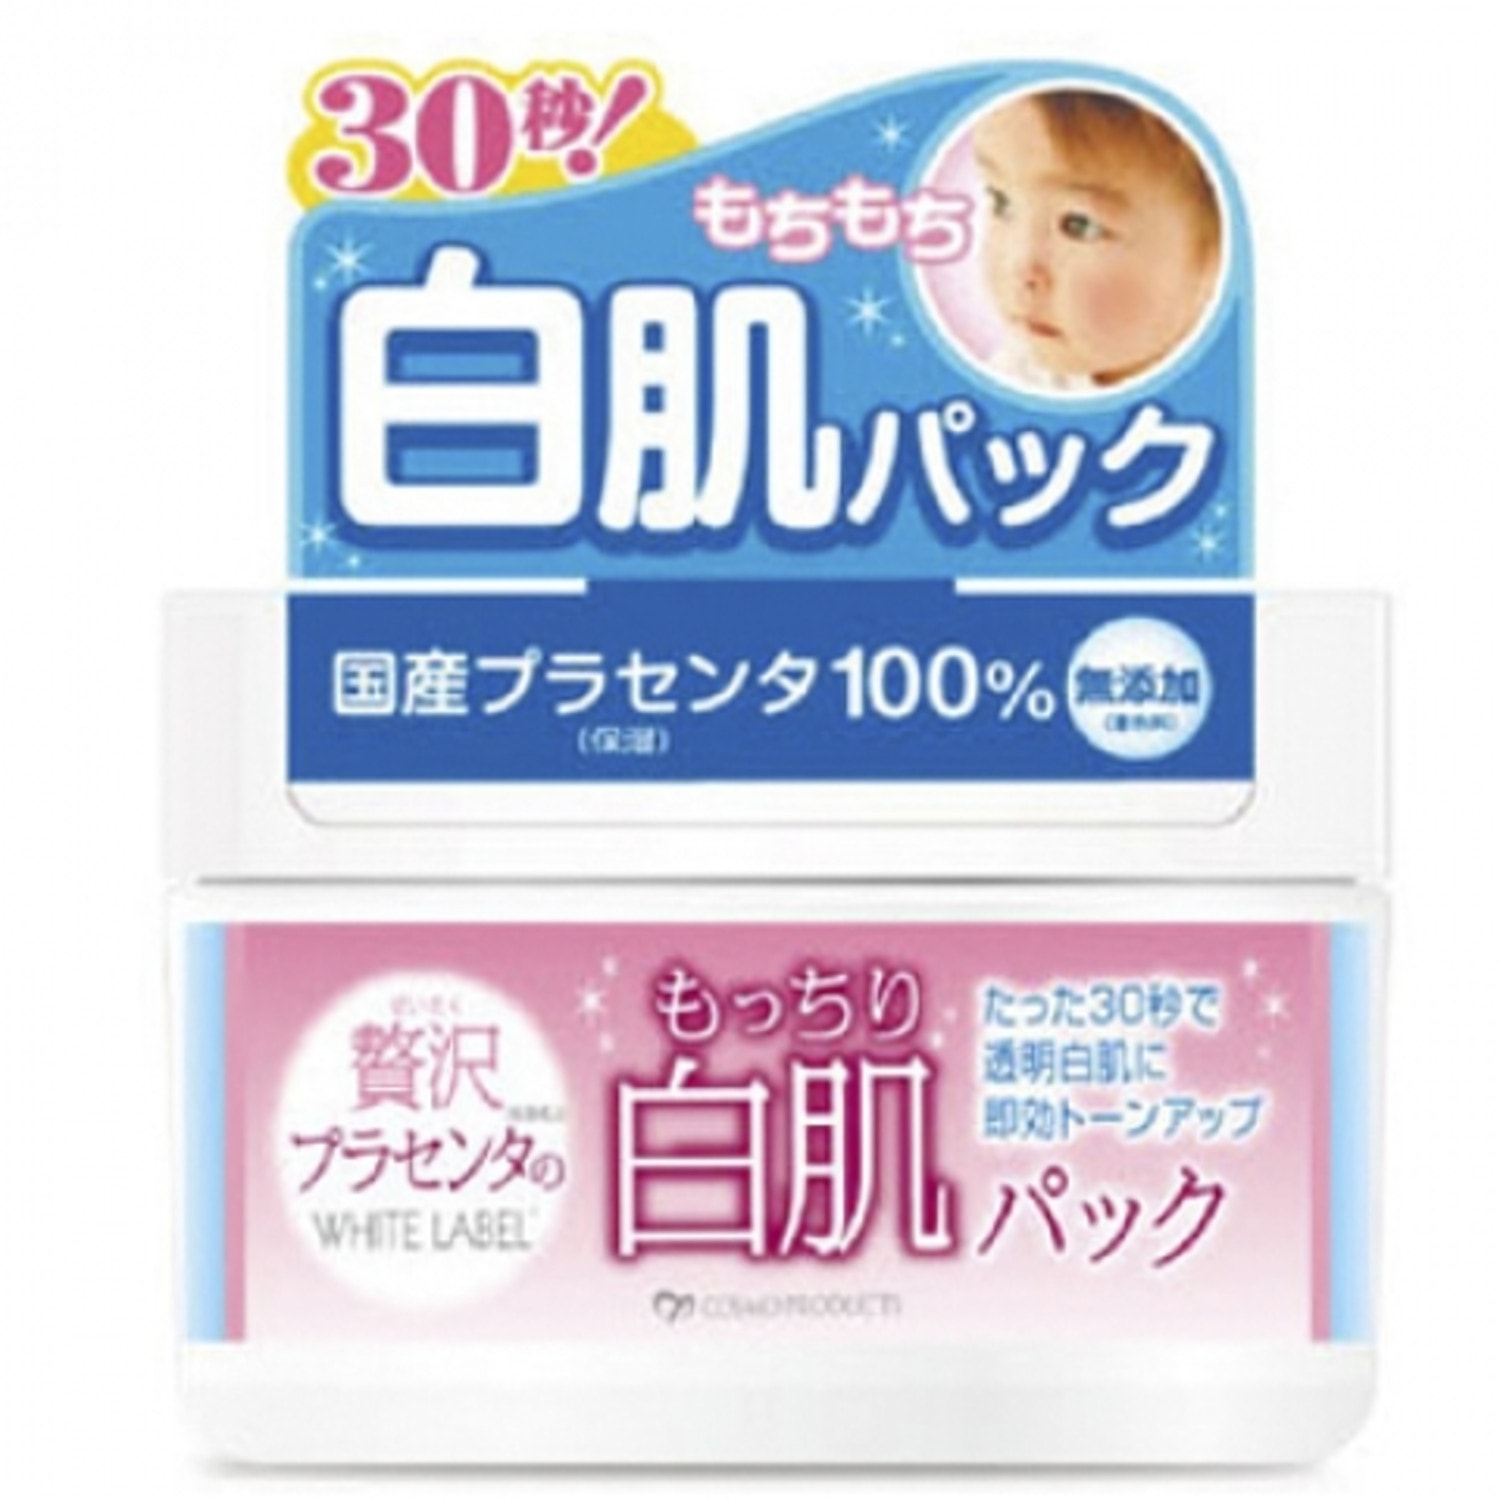 MICCOSMO "WHITE LABEL Premium Placenta Pack" Очищающая и увлажняющая крем-маска для лица с плацентой 130 г. / 624601